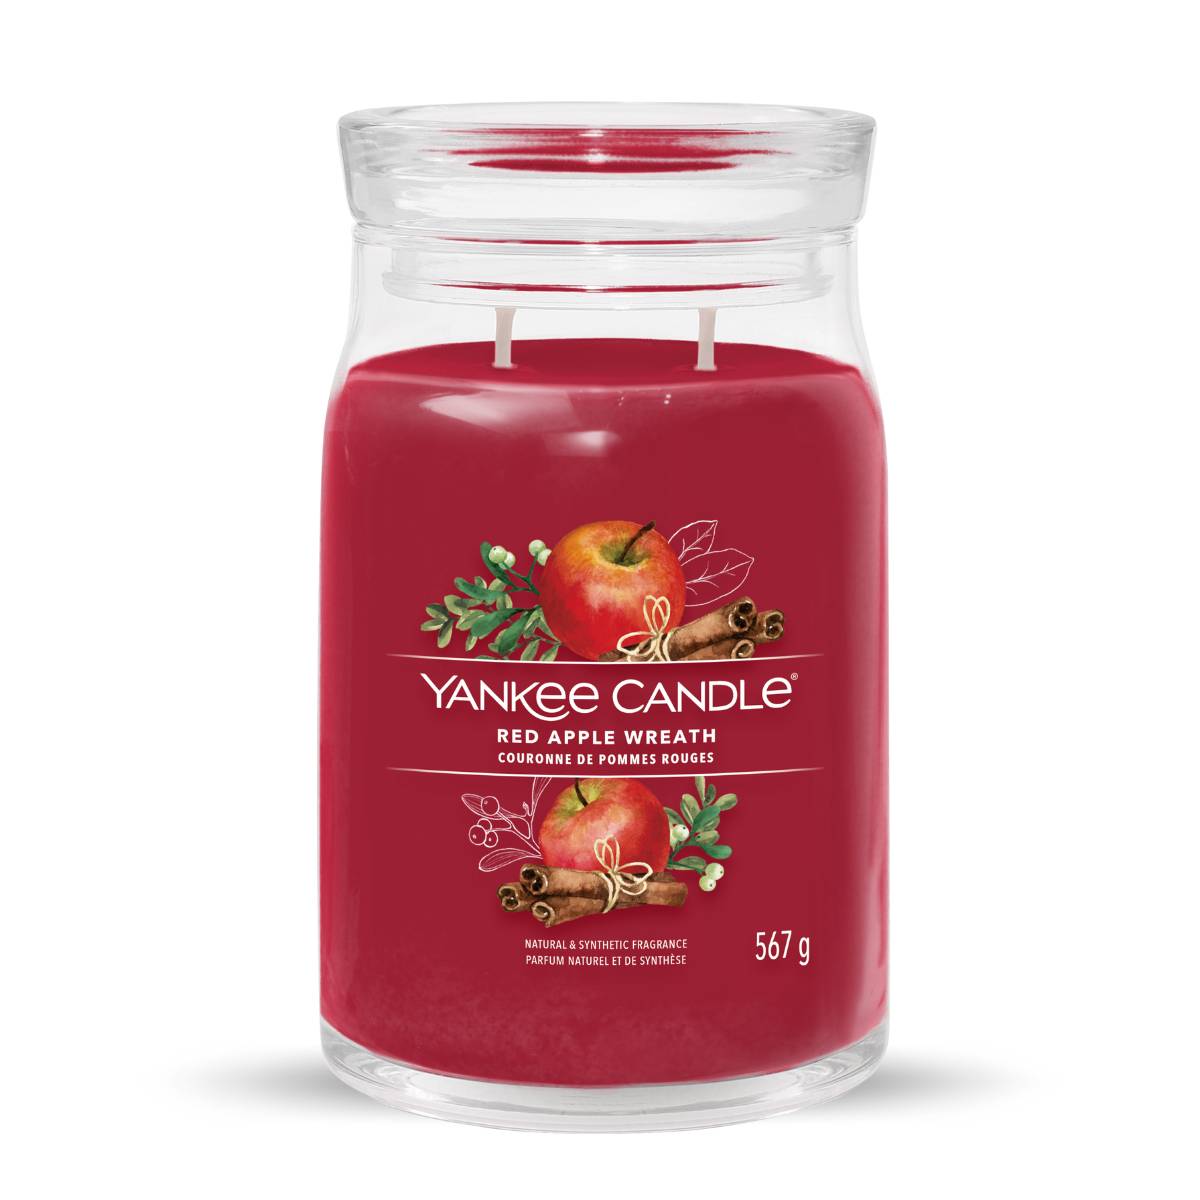 Red Apple Wreath - Signature Duftkerze im Glas 567g - Yankee Candle®